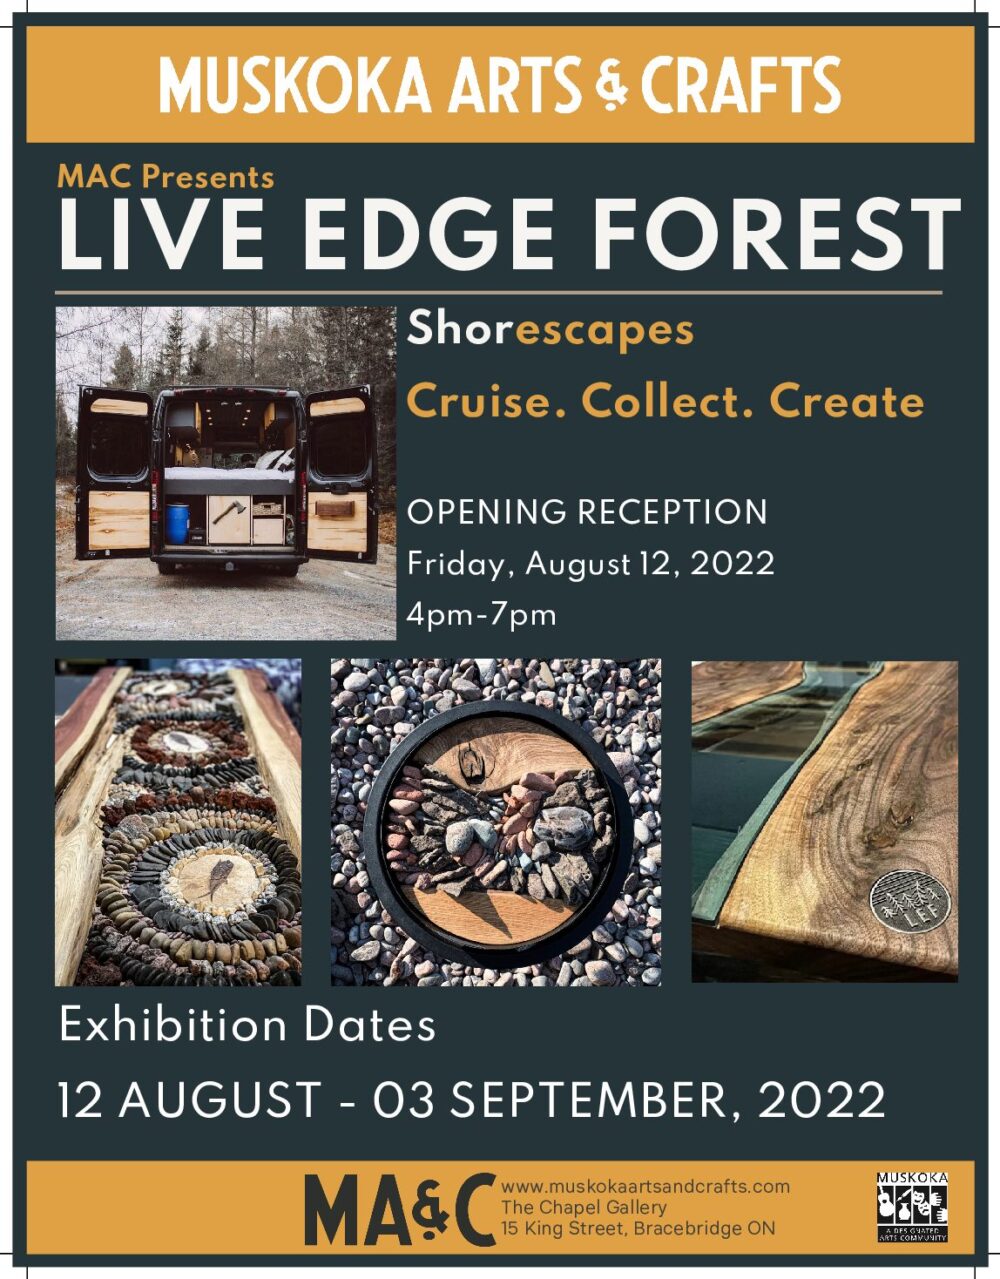 Muskoka Arts & Crafts presents Live Edge Forest: Shorescapes